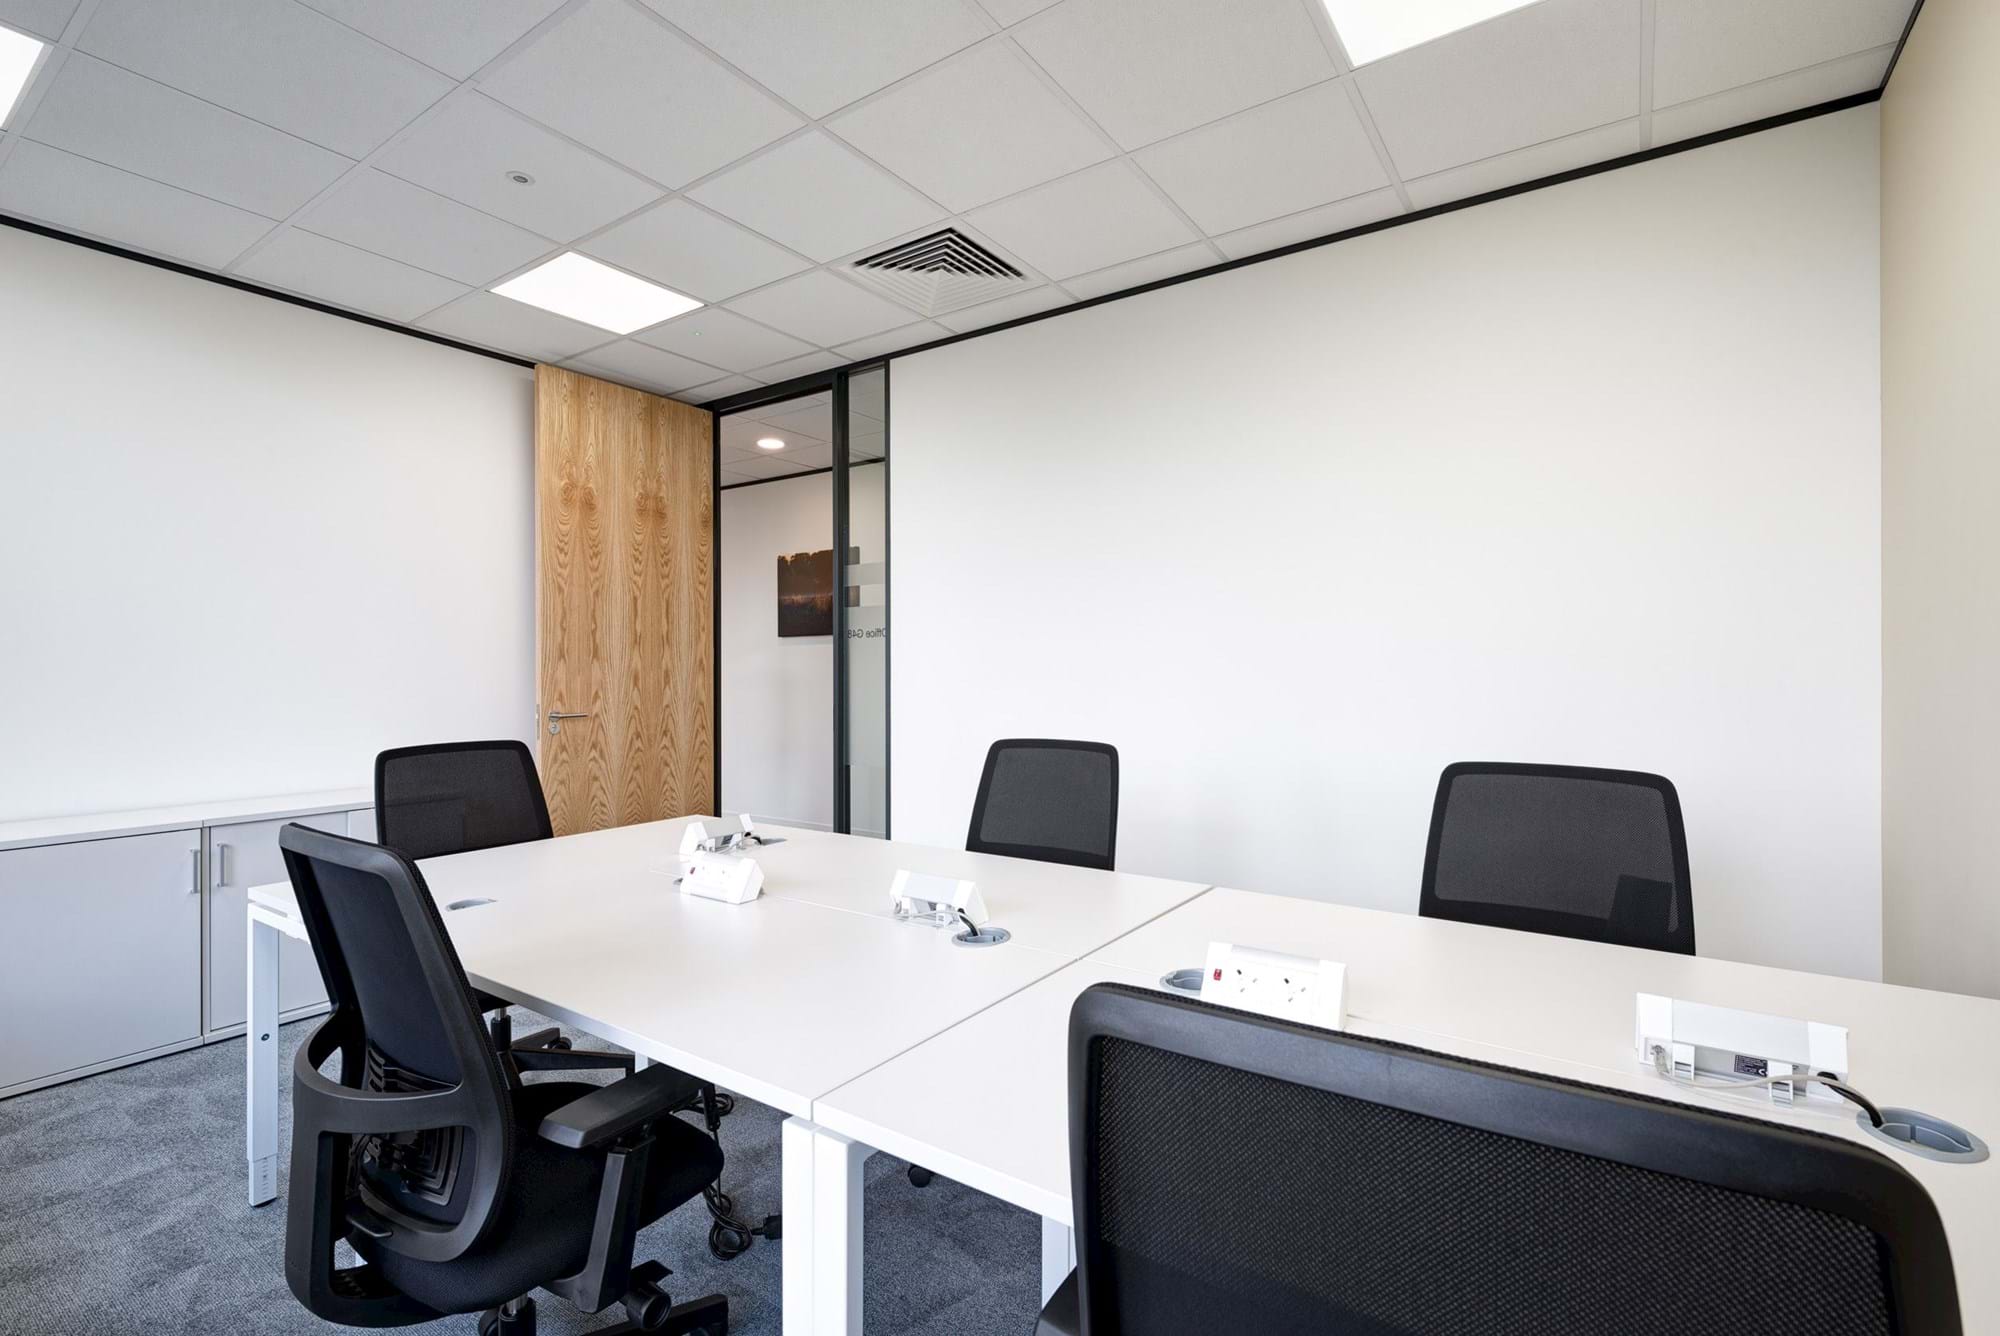 Modus Workspace office design, fit out and refurbishment - Regus Ashford - Regus Ashford 13 highres sRGB.jpg